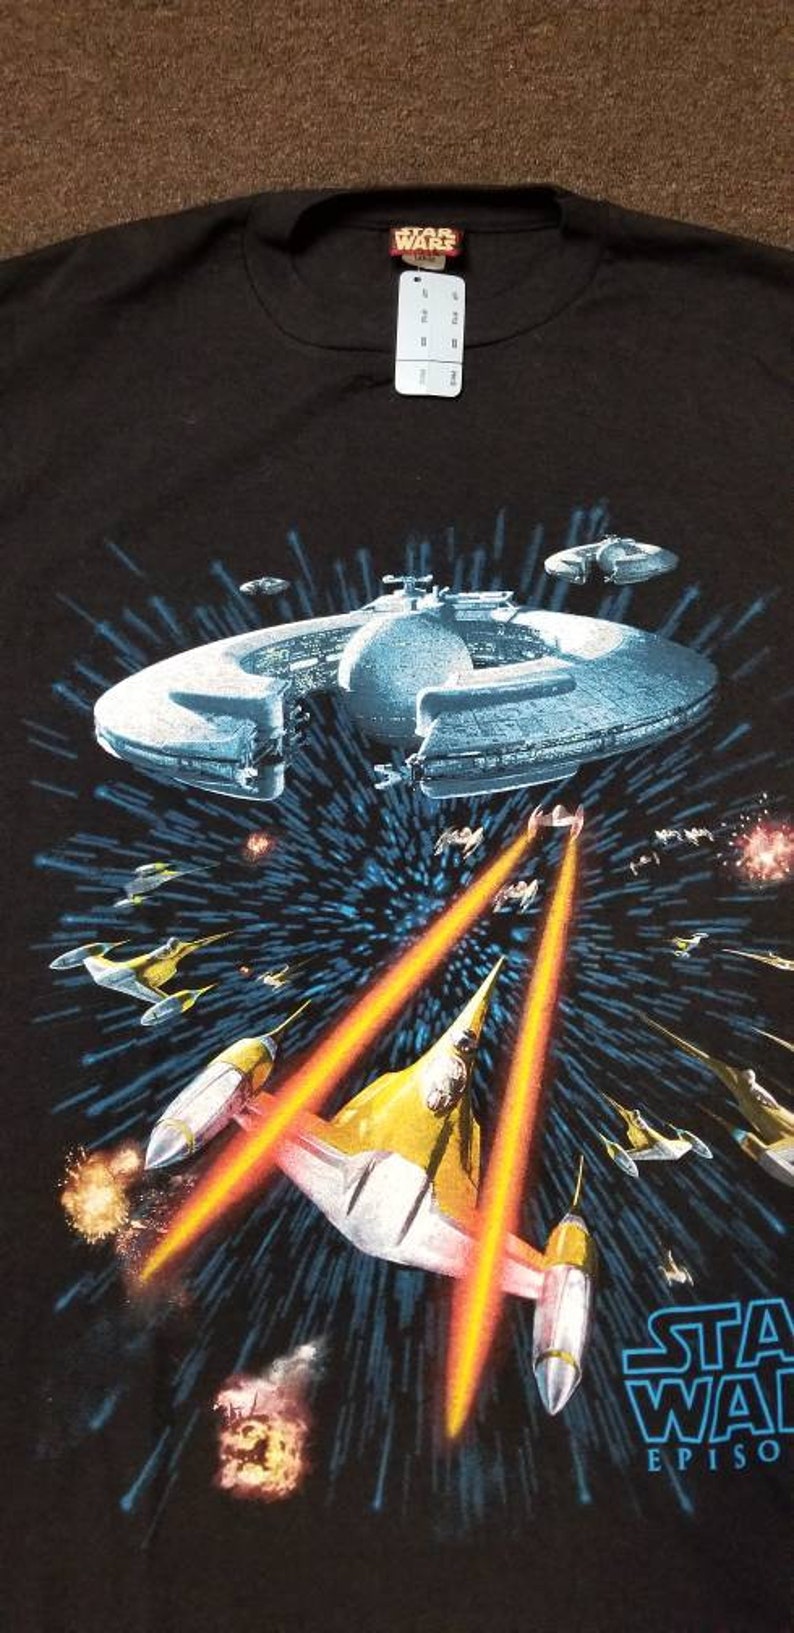 New Large 1999 star wars shirt, star wars episode 1 shirt,90s star wars shirt,star wars prequel shirt image 4